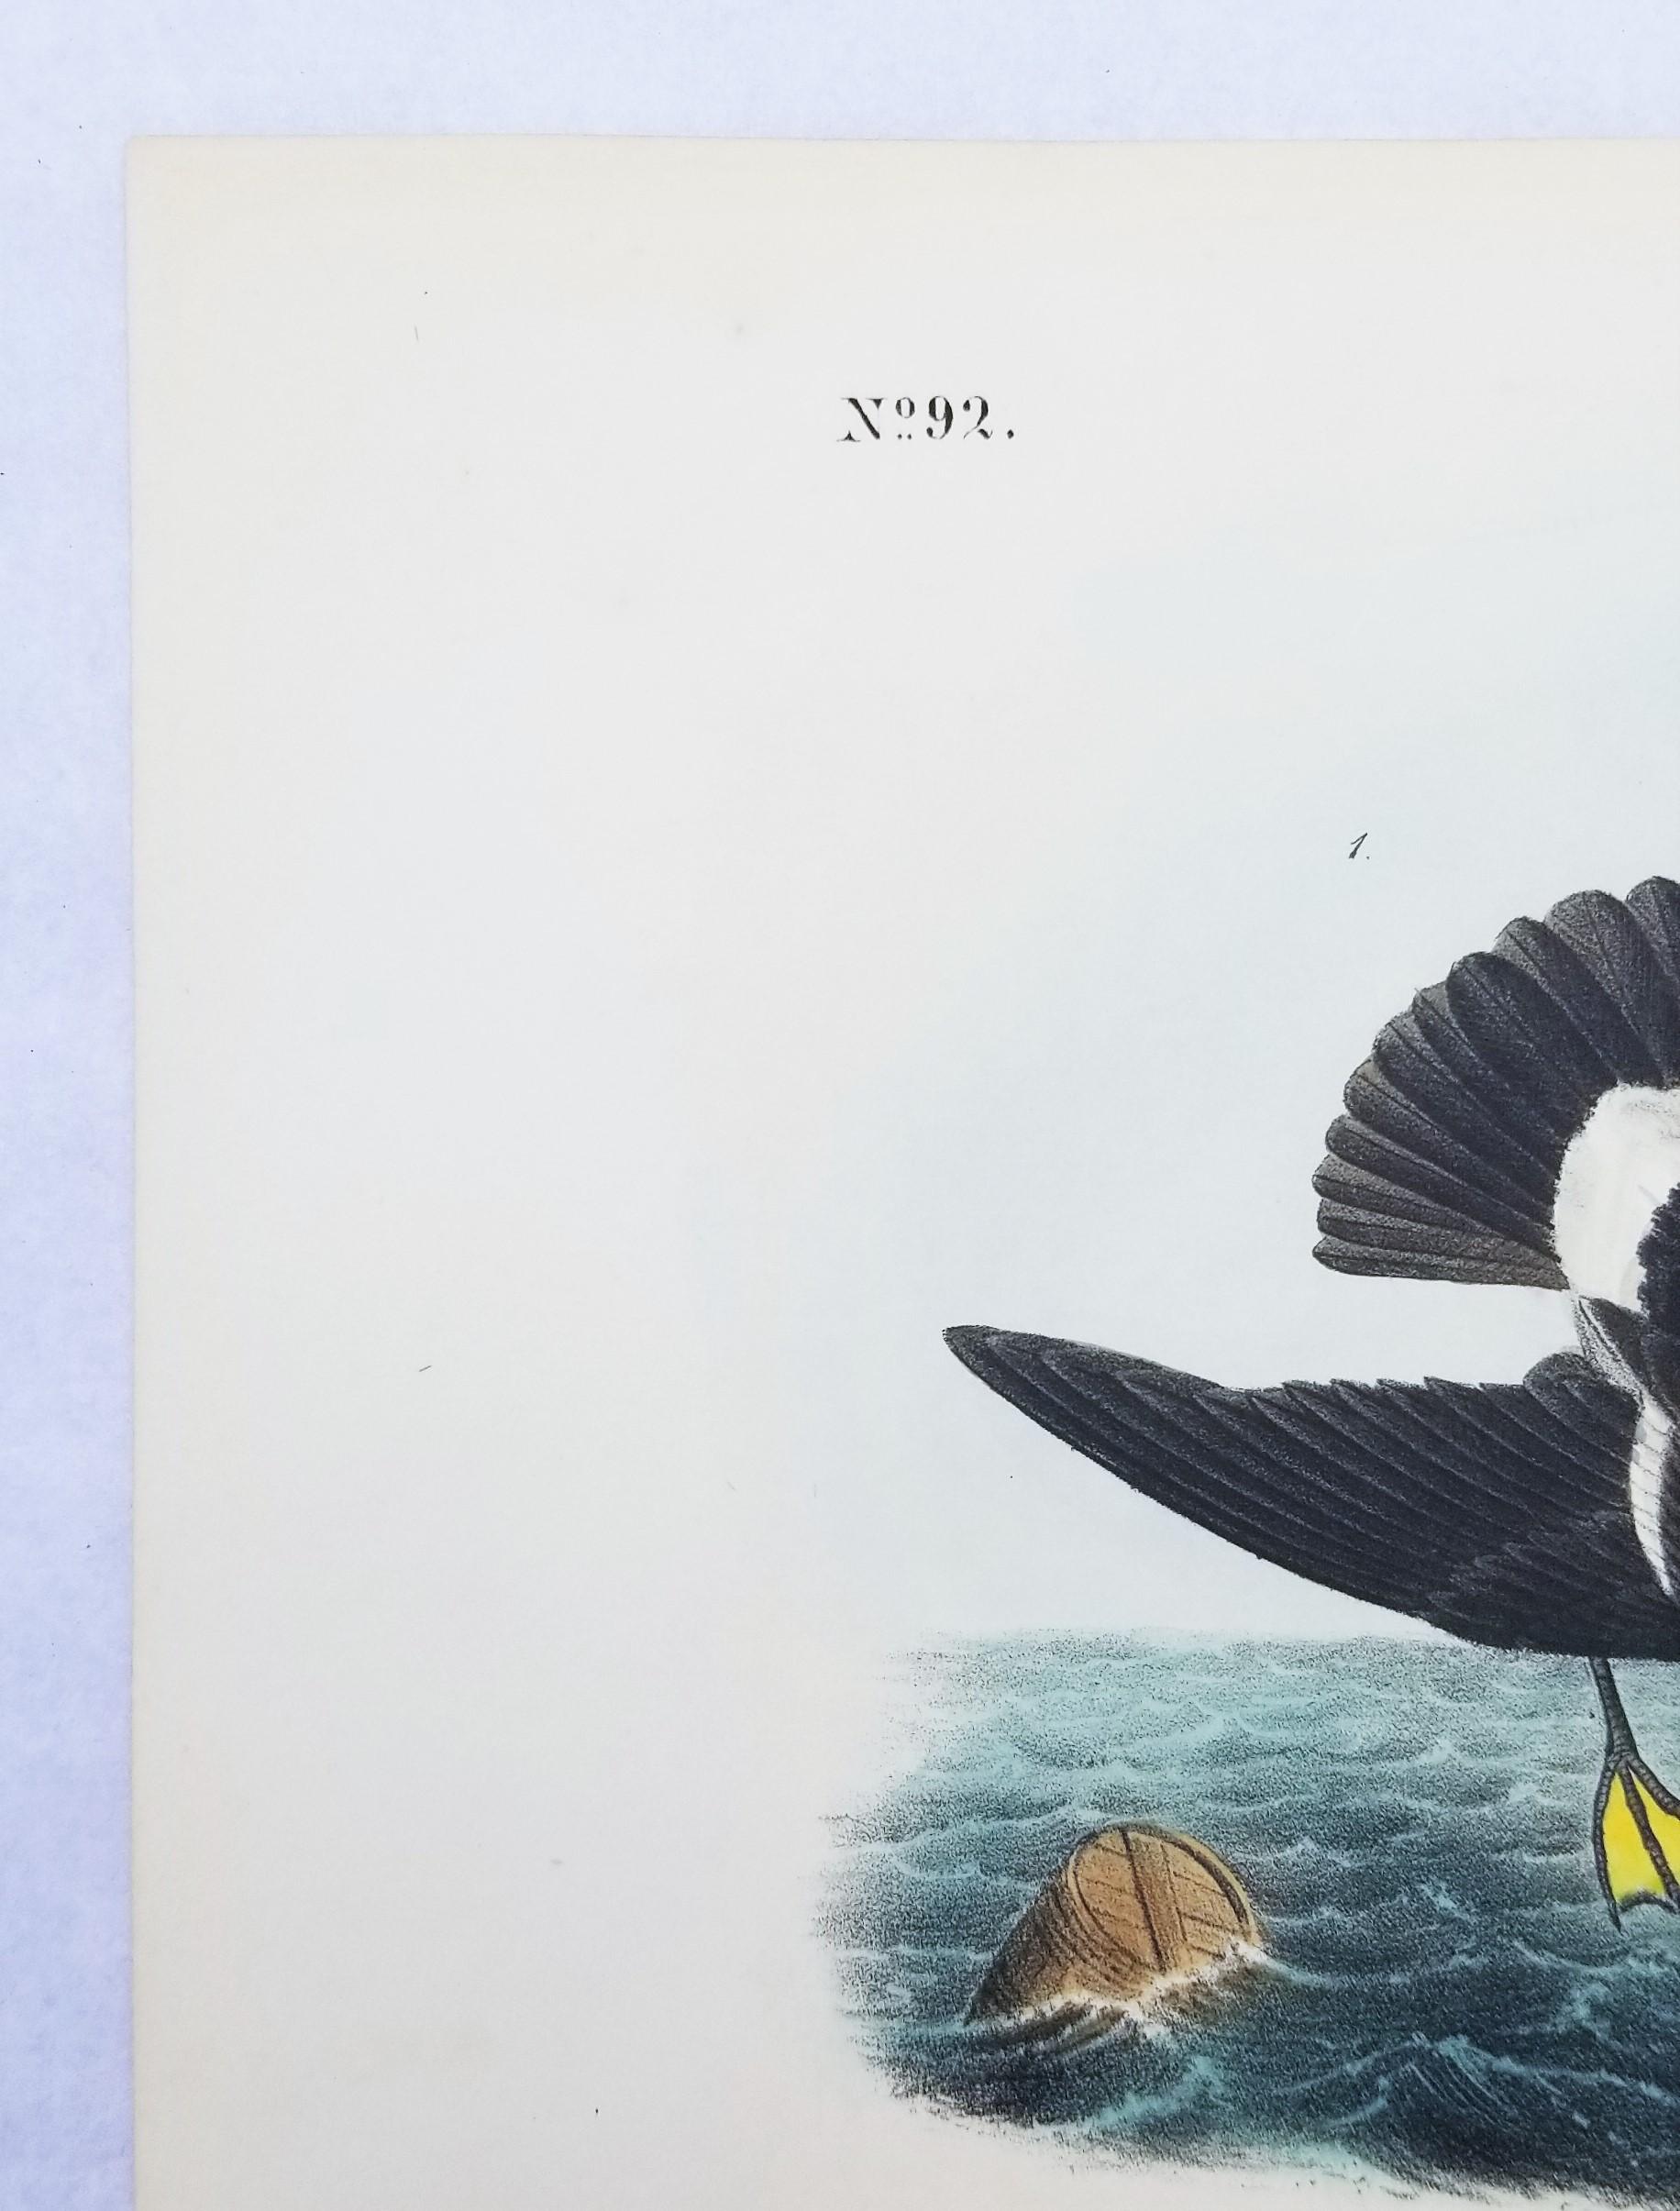 Artistics : John James Audubon (américain, 1785-1851)
Titre : 